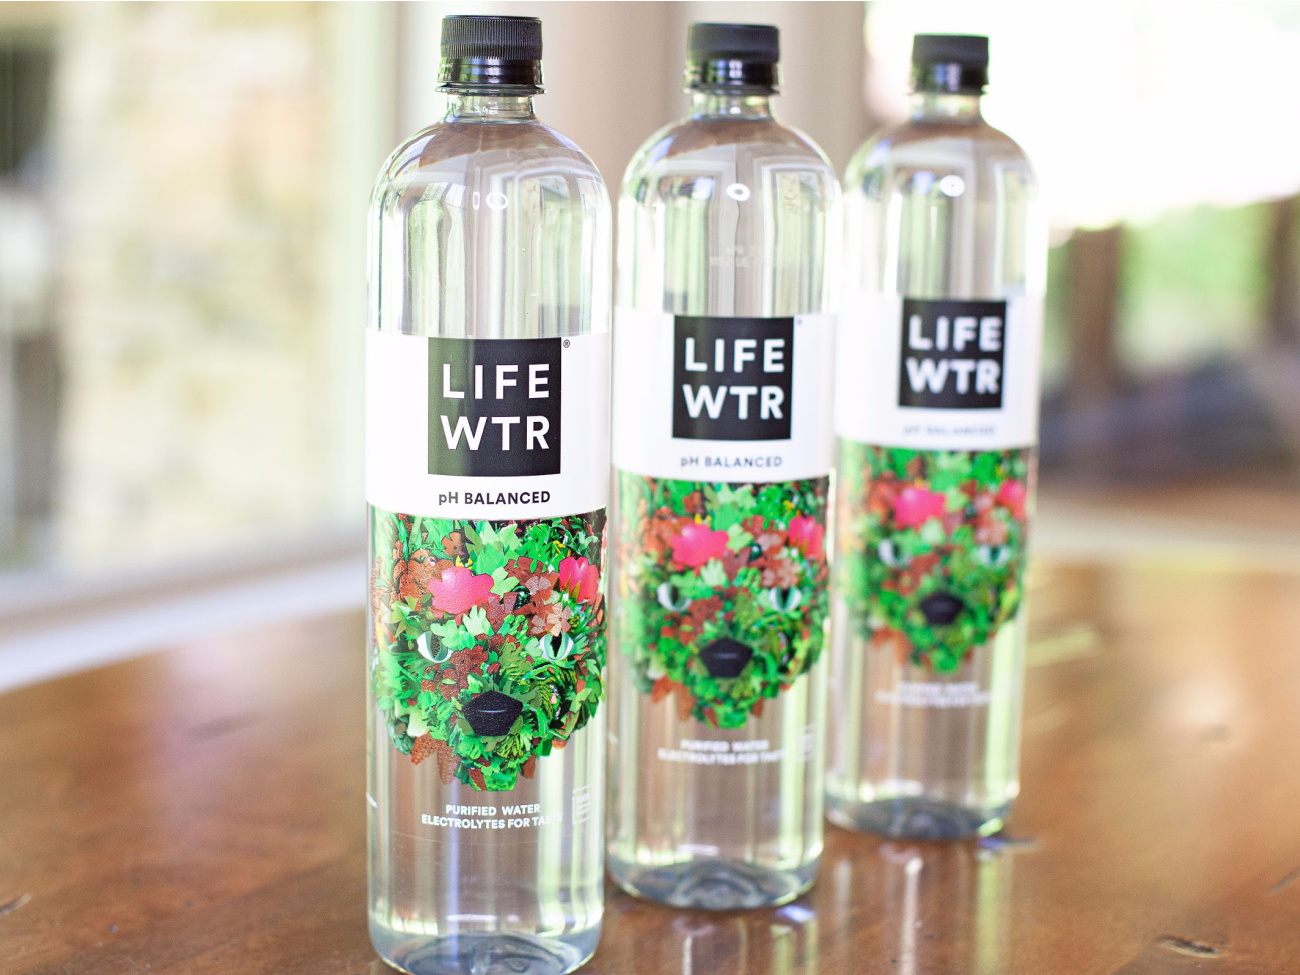 Get Bottles Of Lifewtr For Just 83¢ Each At Publix